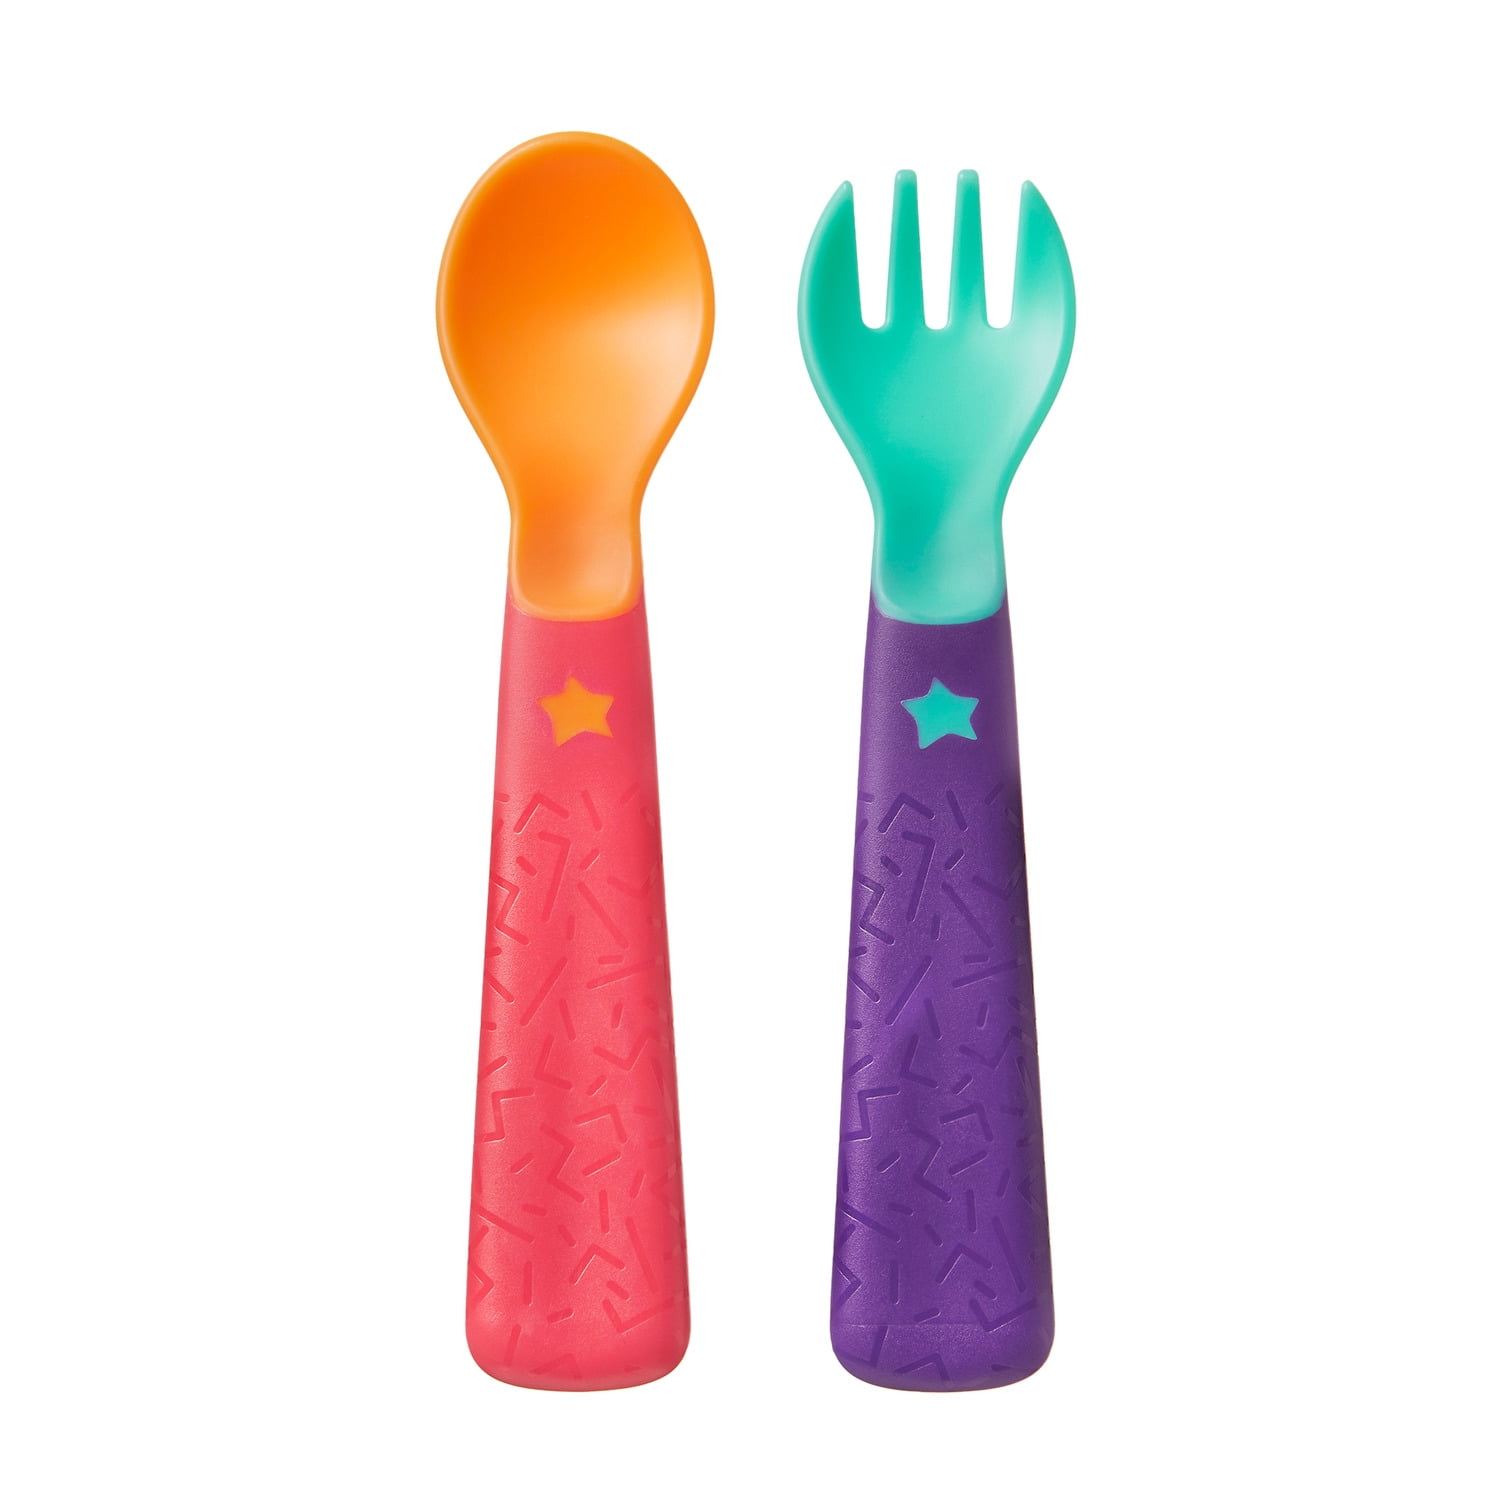 Toddler Self Feeding Cutlery Easy Grip Utensils Baby Spoon and Fork Set  (BPA-Free, NO FDA Certification) - Mushroom / Pink Wholesale